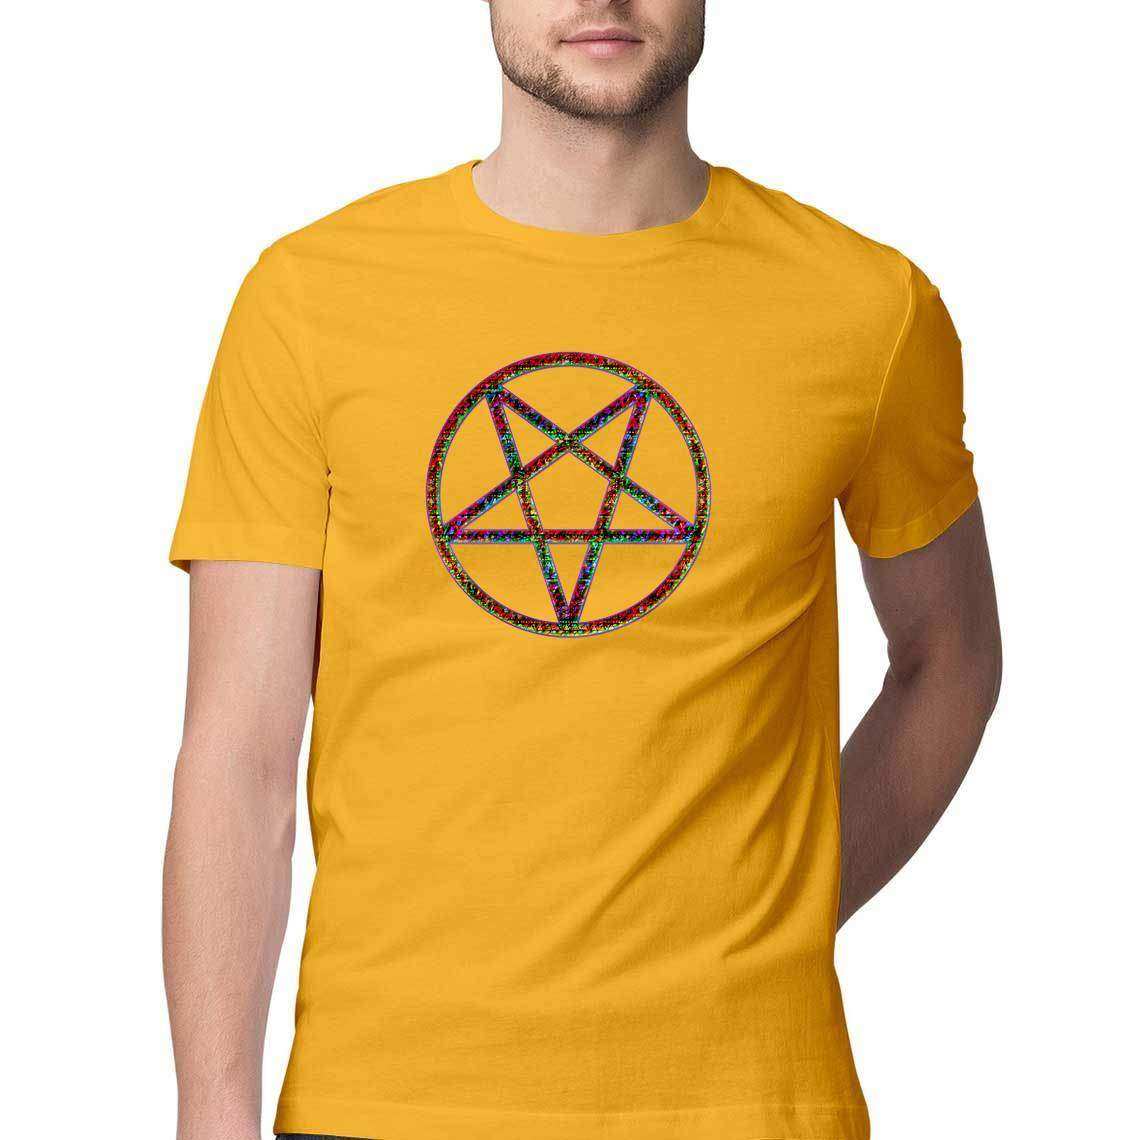 Color Burned Pentagram Graphic T-Shirt - CBD Store India